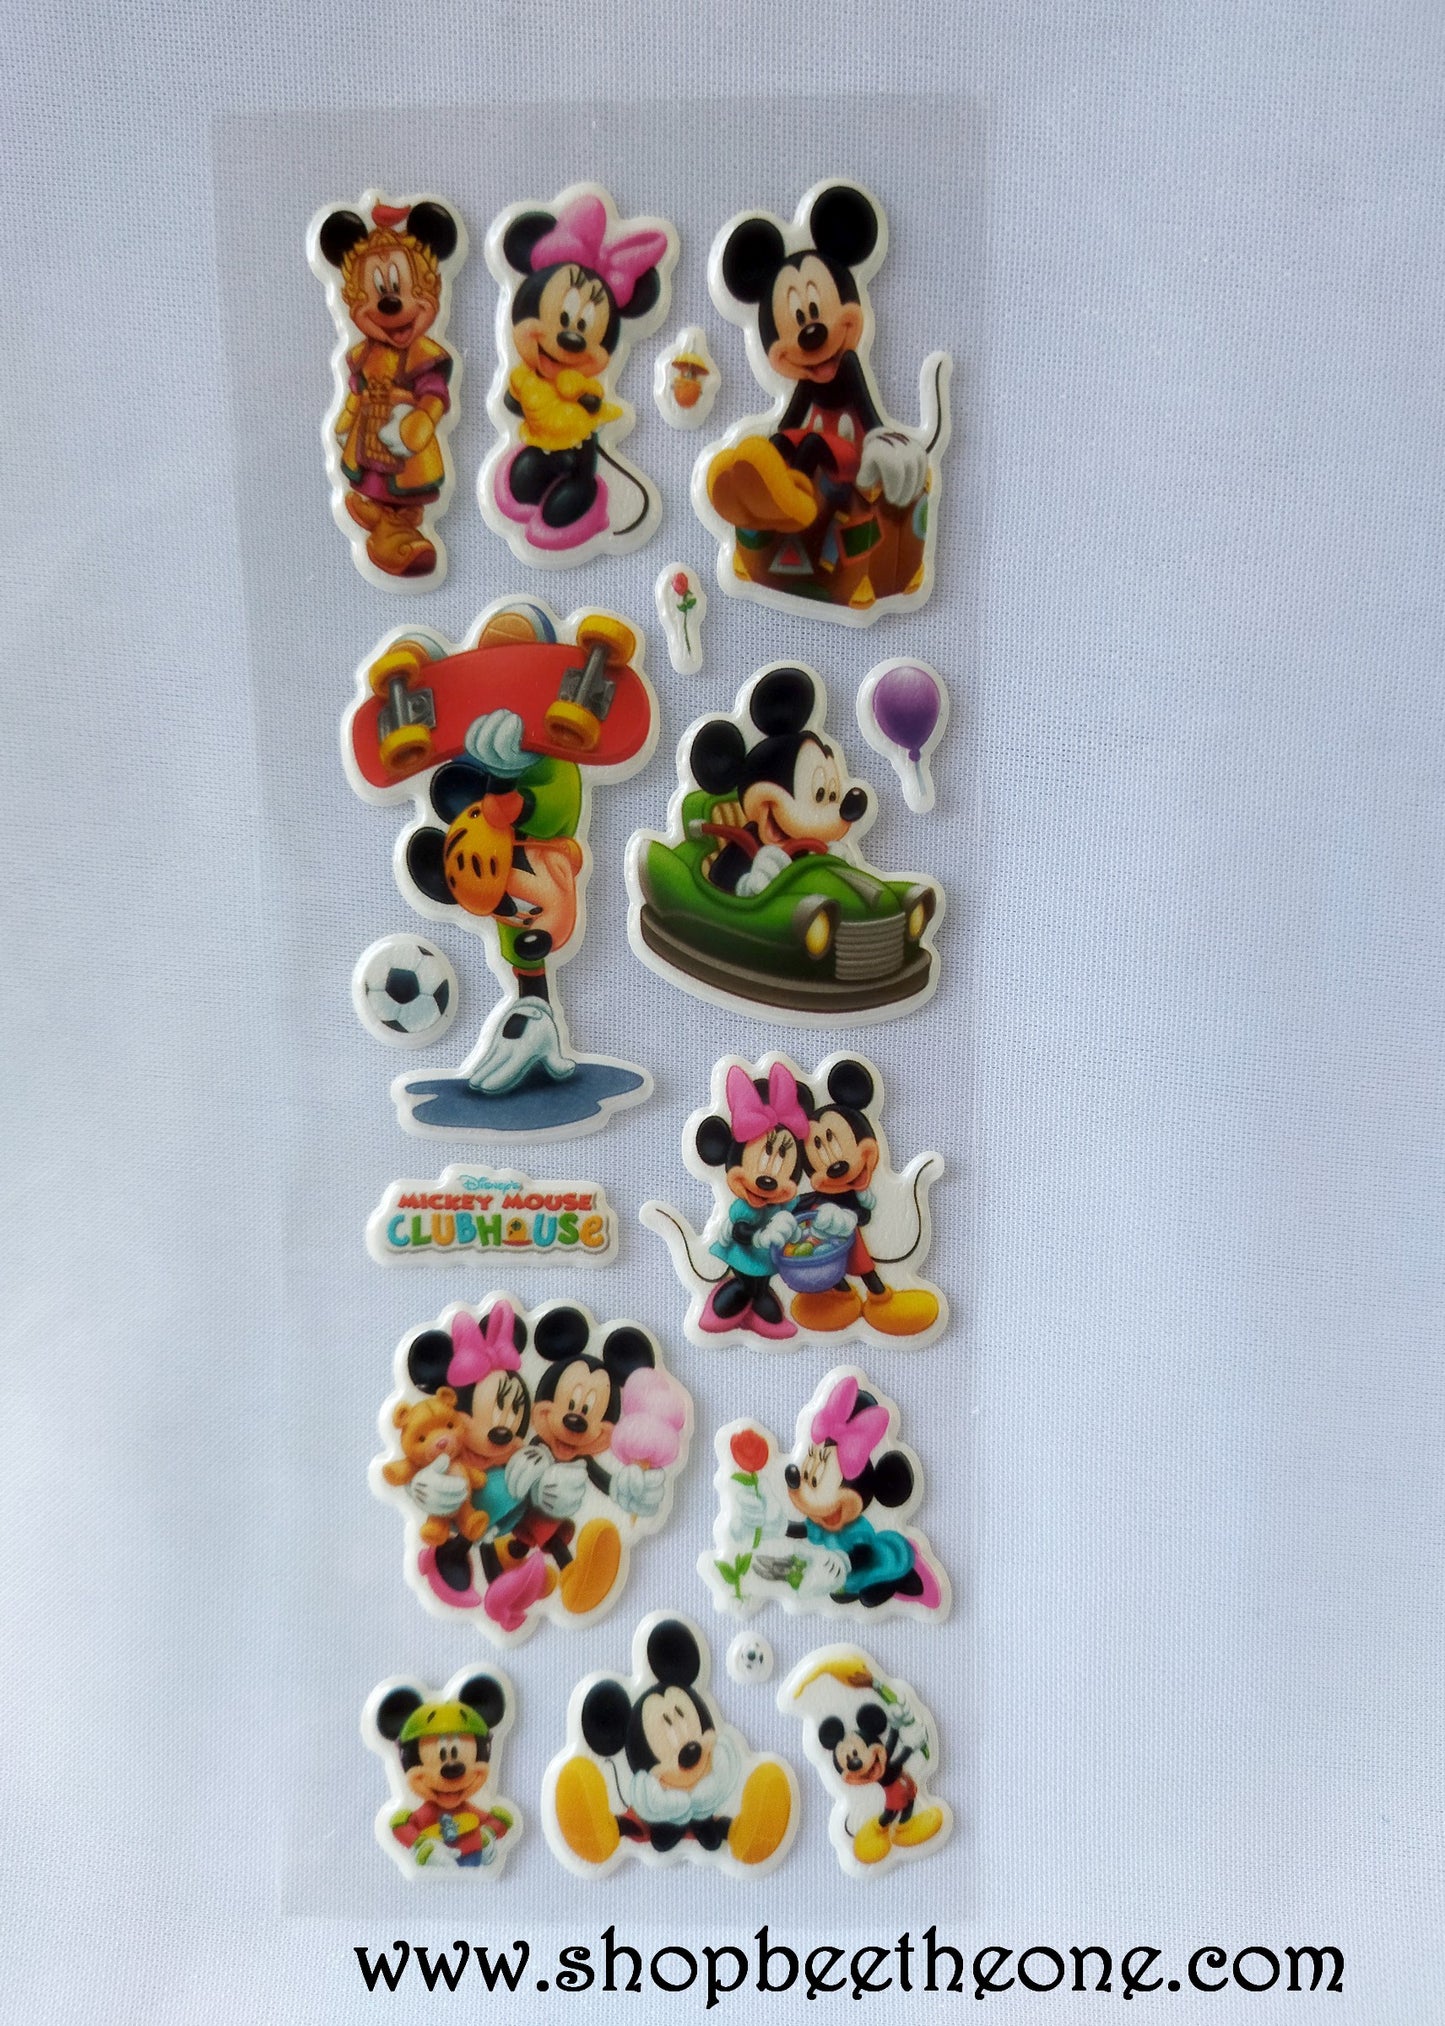 Planche de stickers autocollants en relief Mickey et Minnie